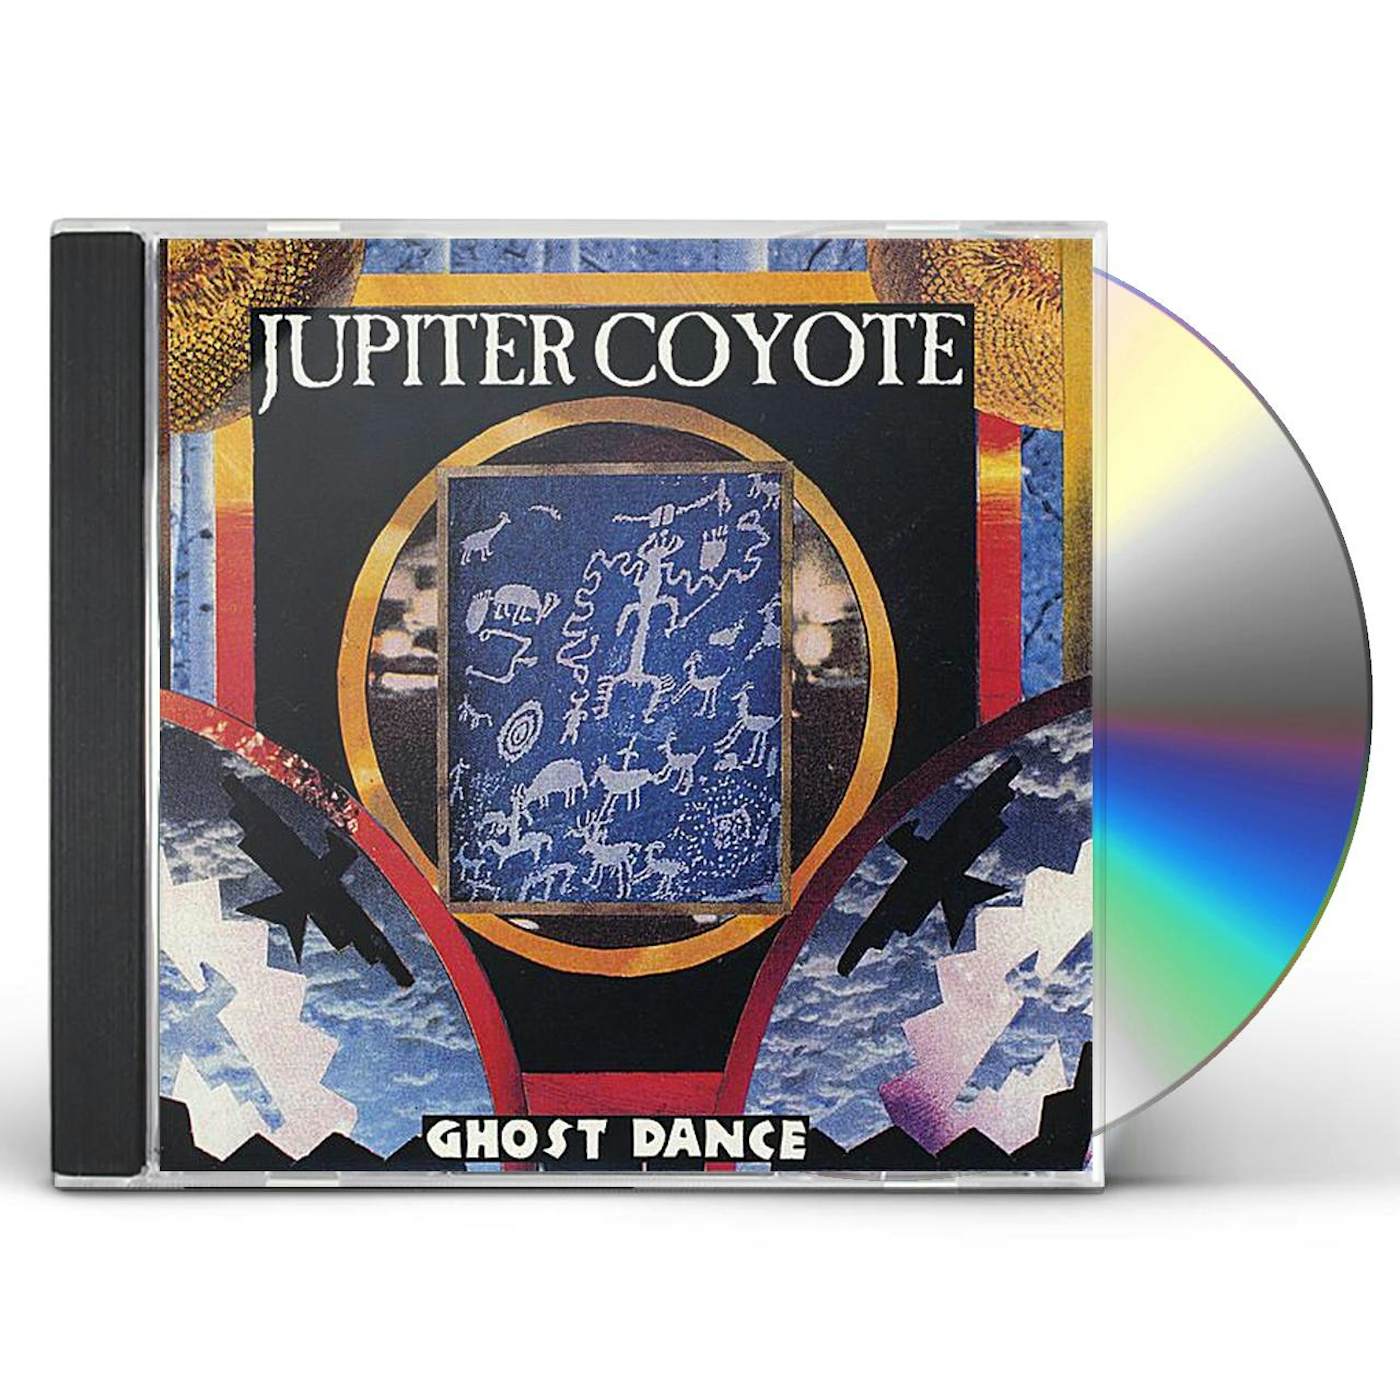 Jupiter Coyote GHOST DANCE CD